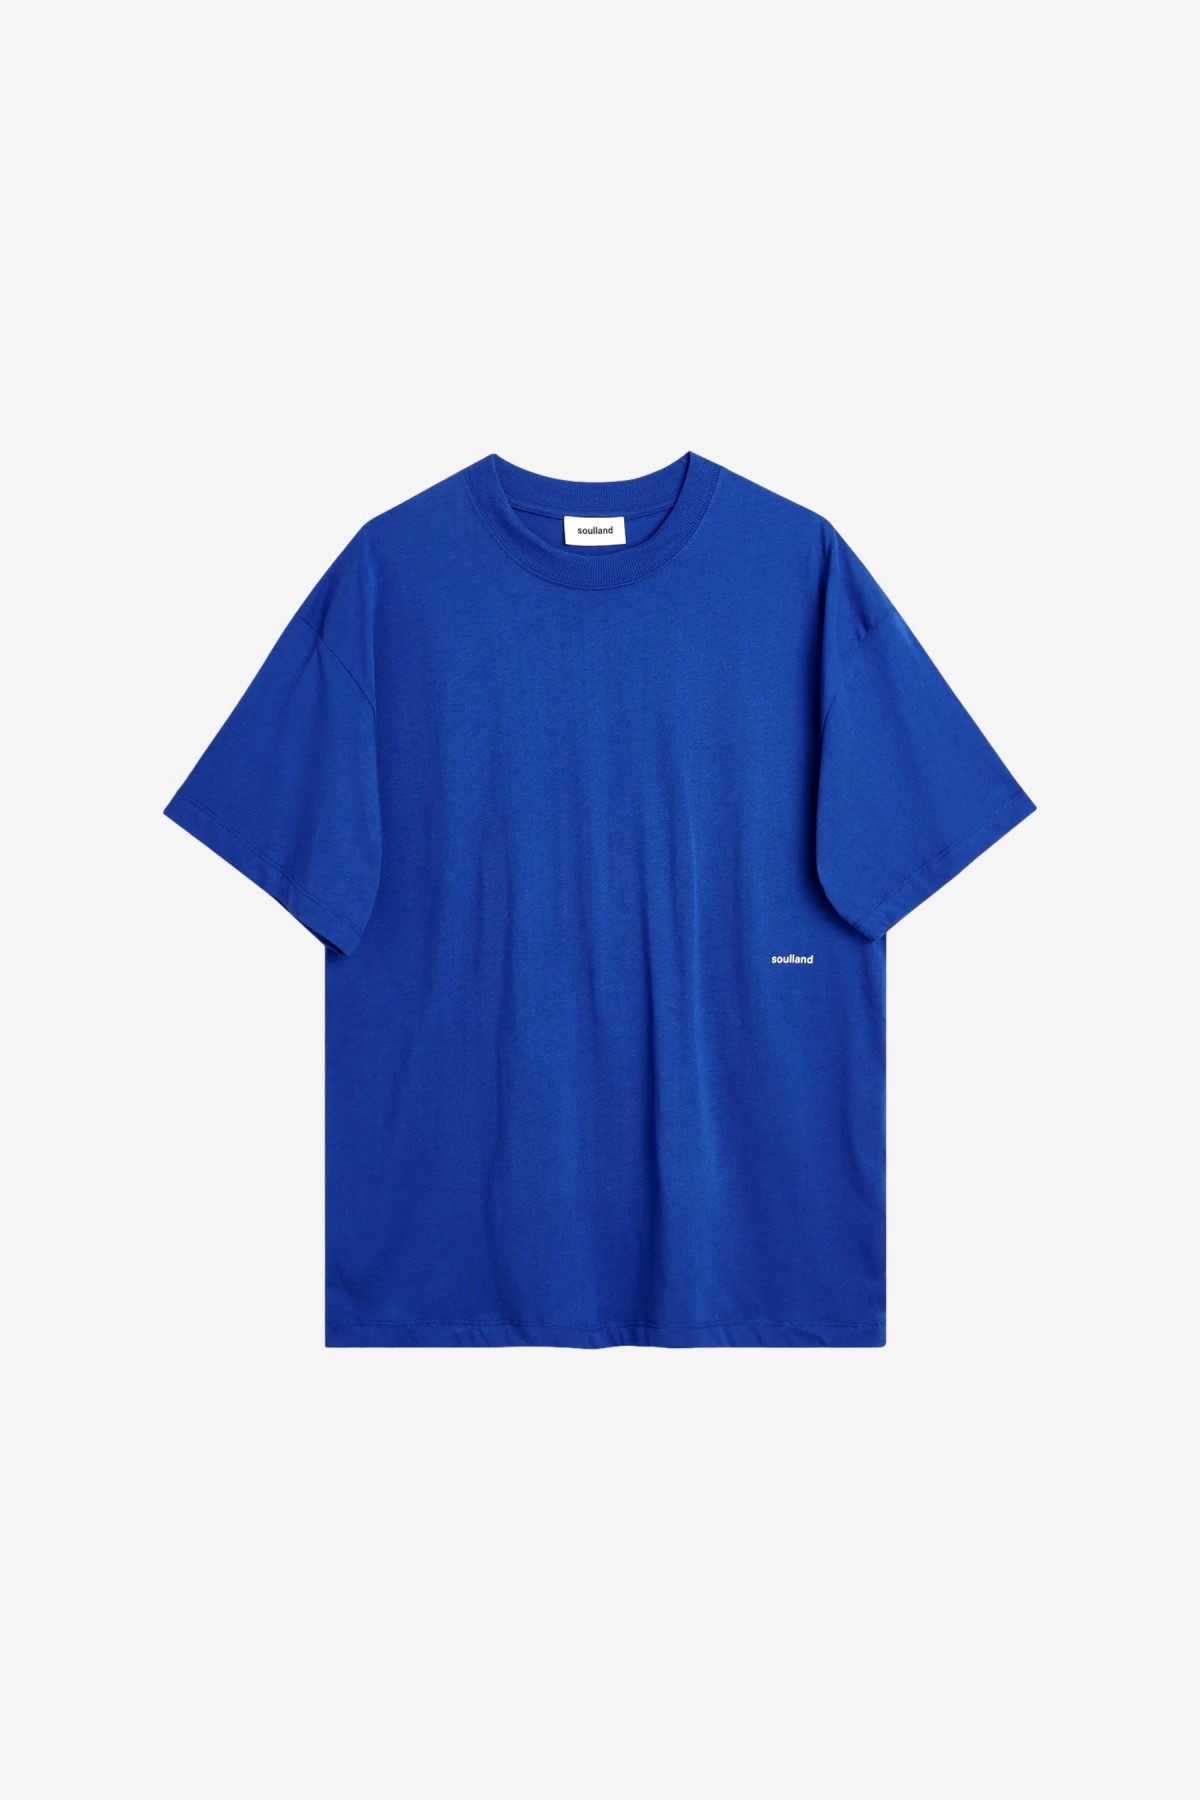 Soulland Ash T-Shirt in Blue